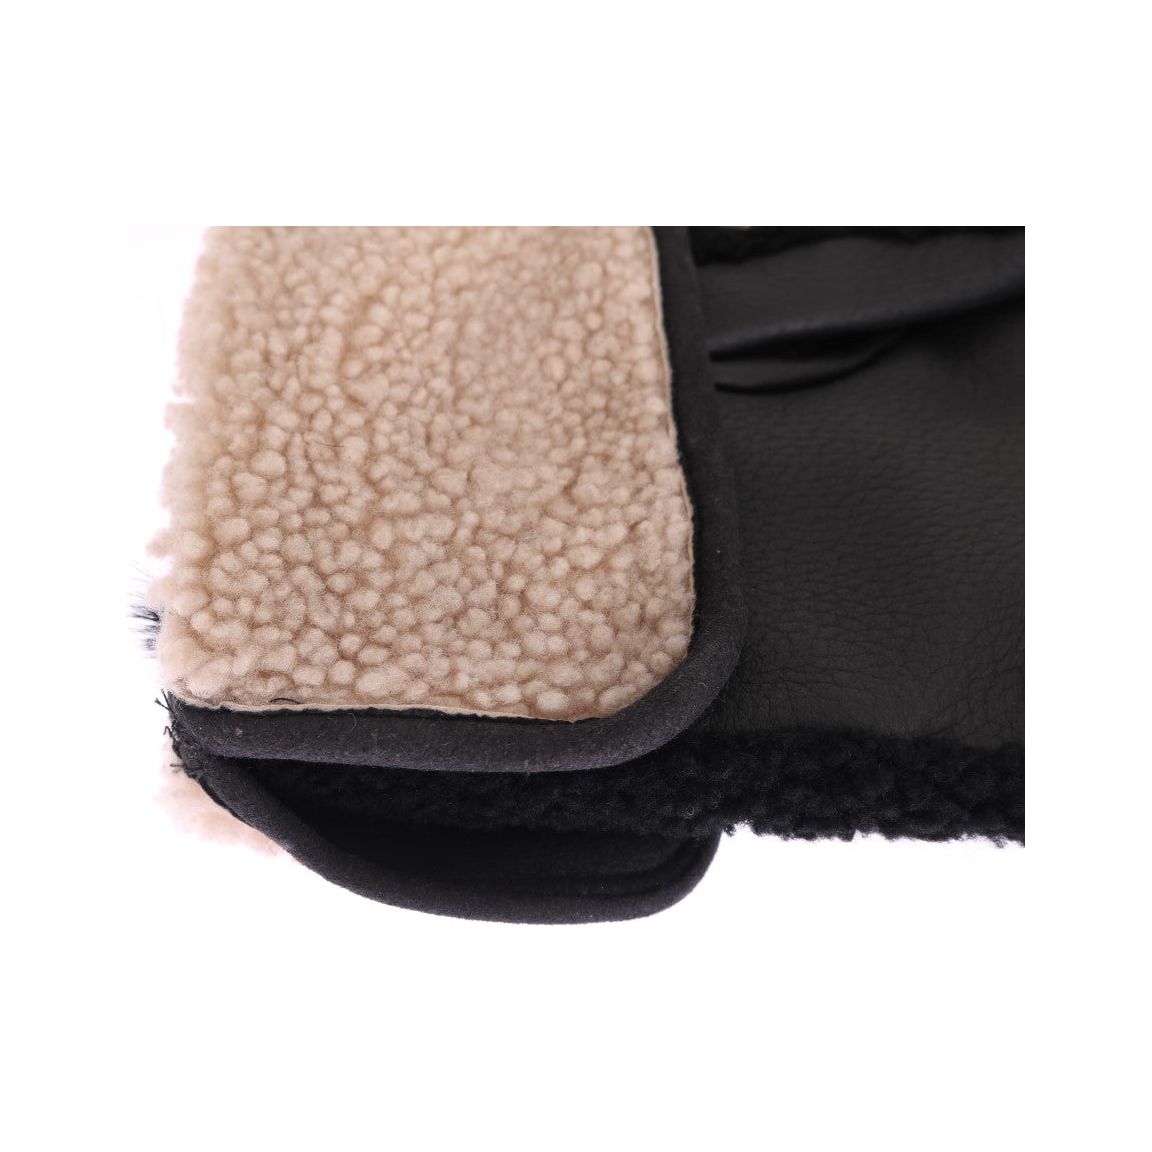 Dolce & Gabbana Studded Black Leather Gentleman's Gloves black-leather-shearling-studded-gloves